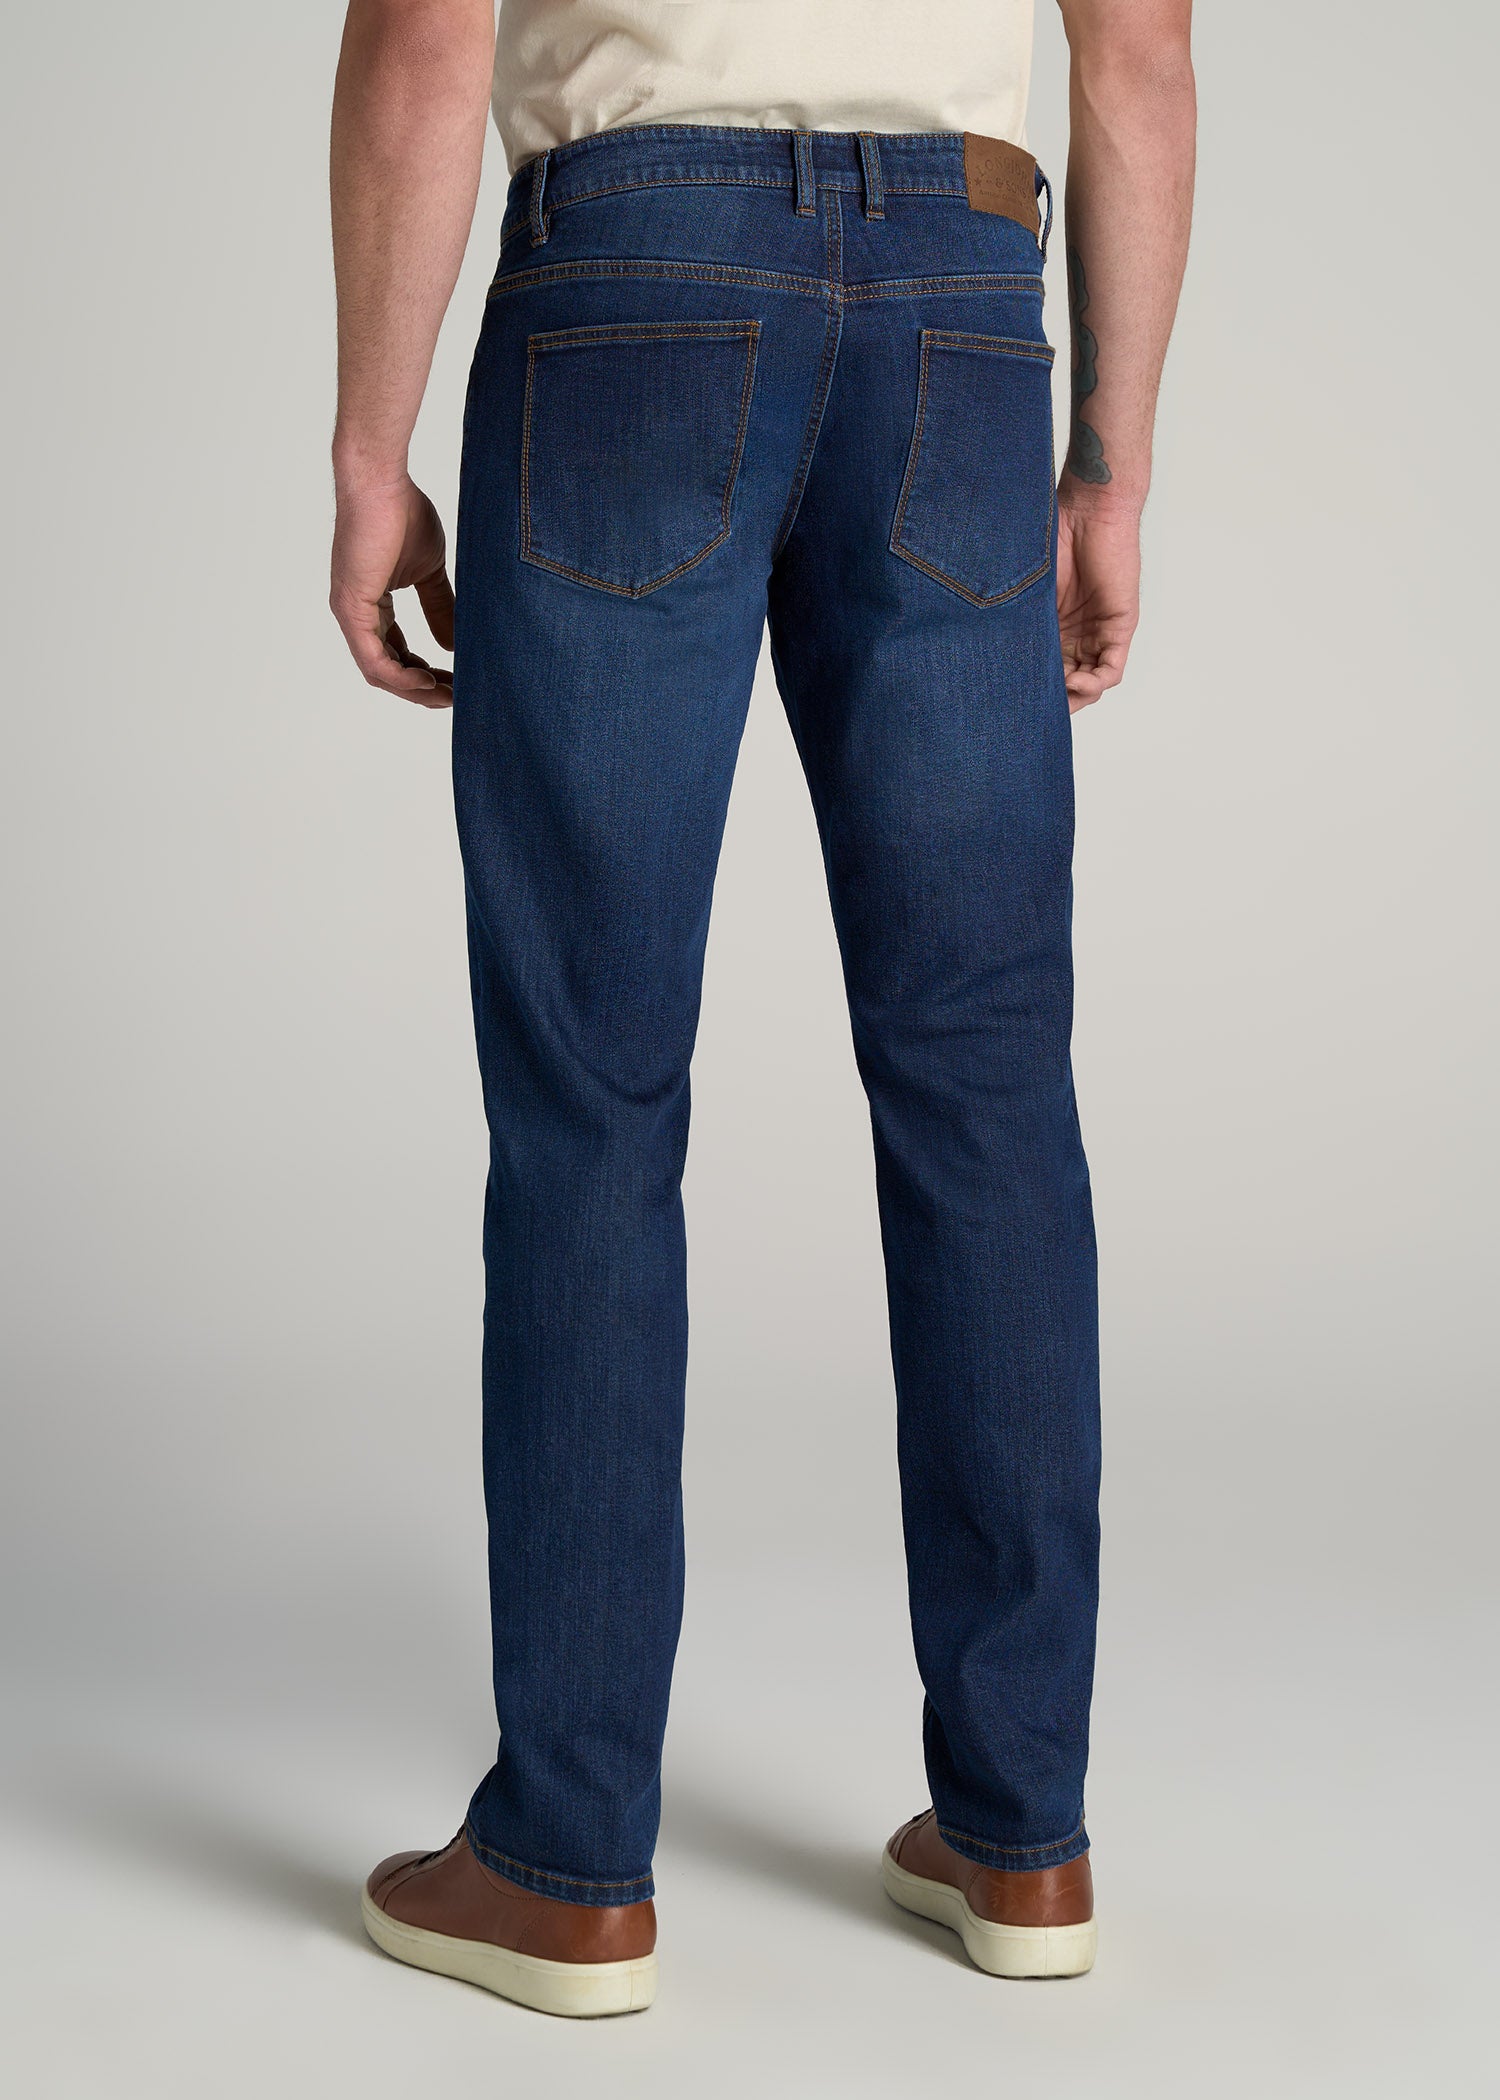 Men's Slim Taper Jeans: Slim Taper Fit Carman Charger Blue Jeans ...